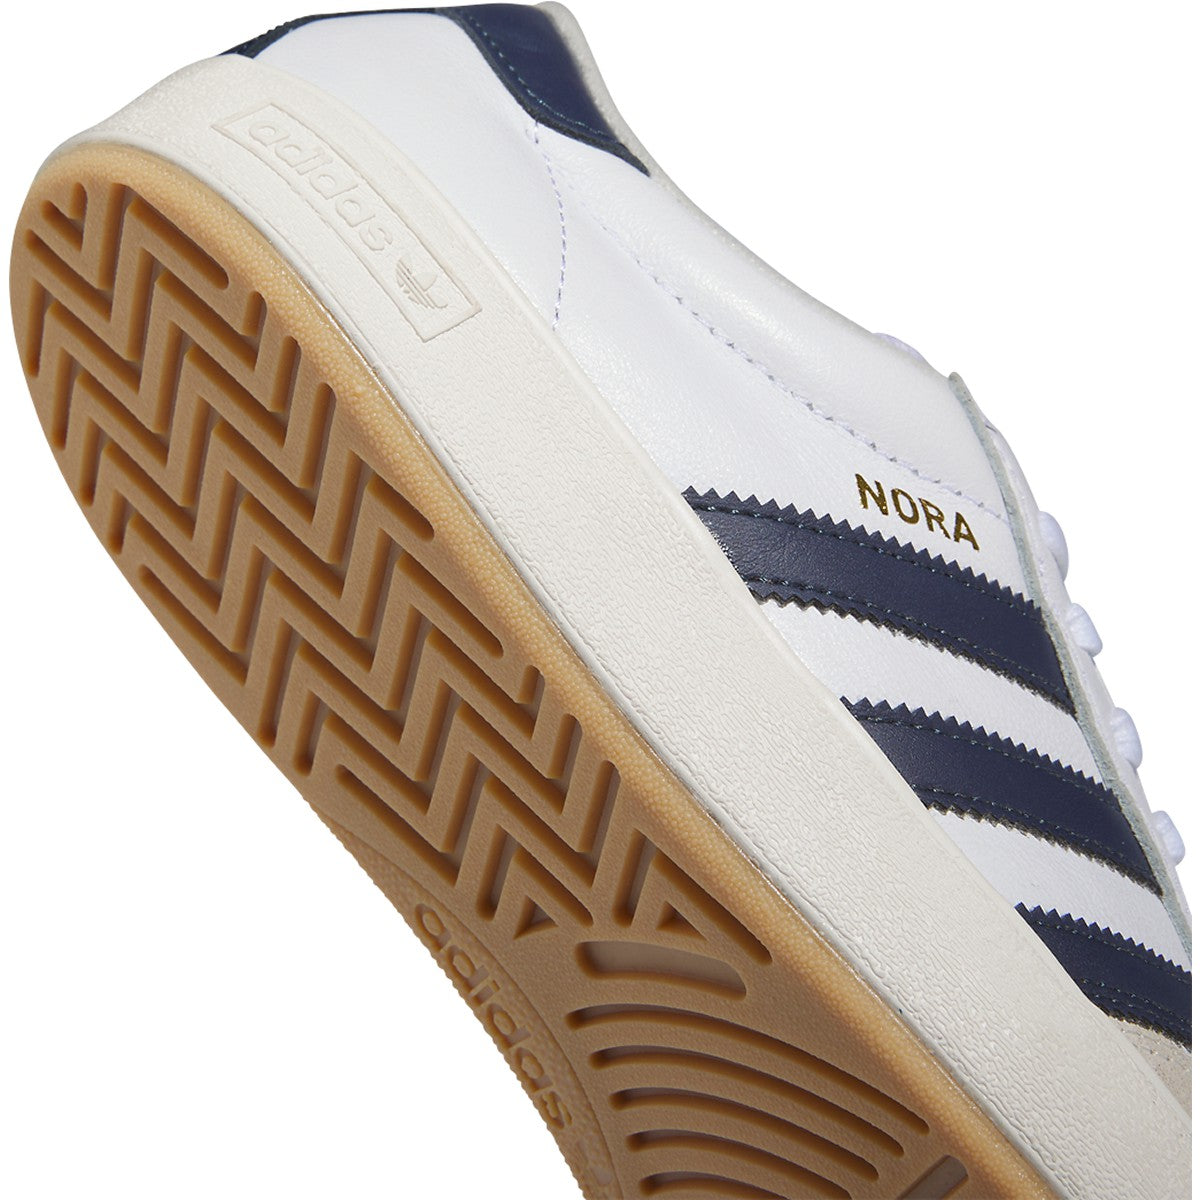 White/Navy Nora Adidas Skate Shoe Detail